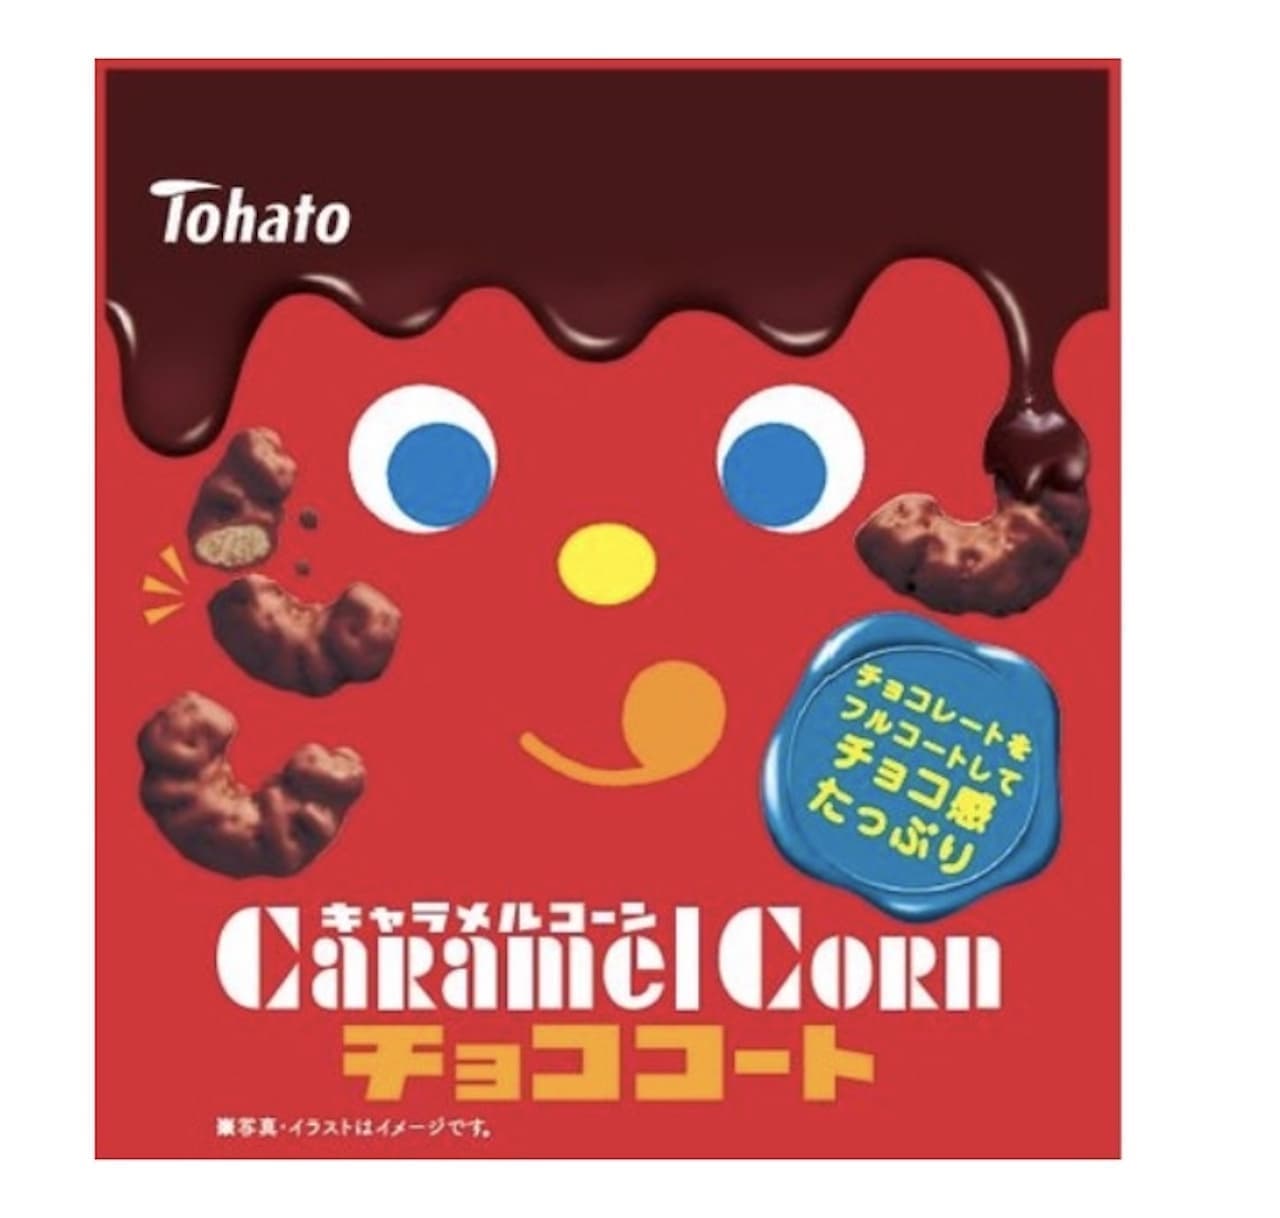 Cleat "Caramel Corn Chocolate Coat"